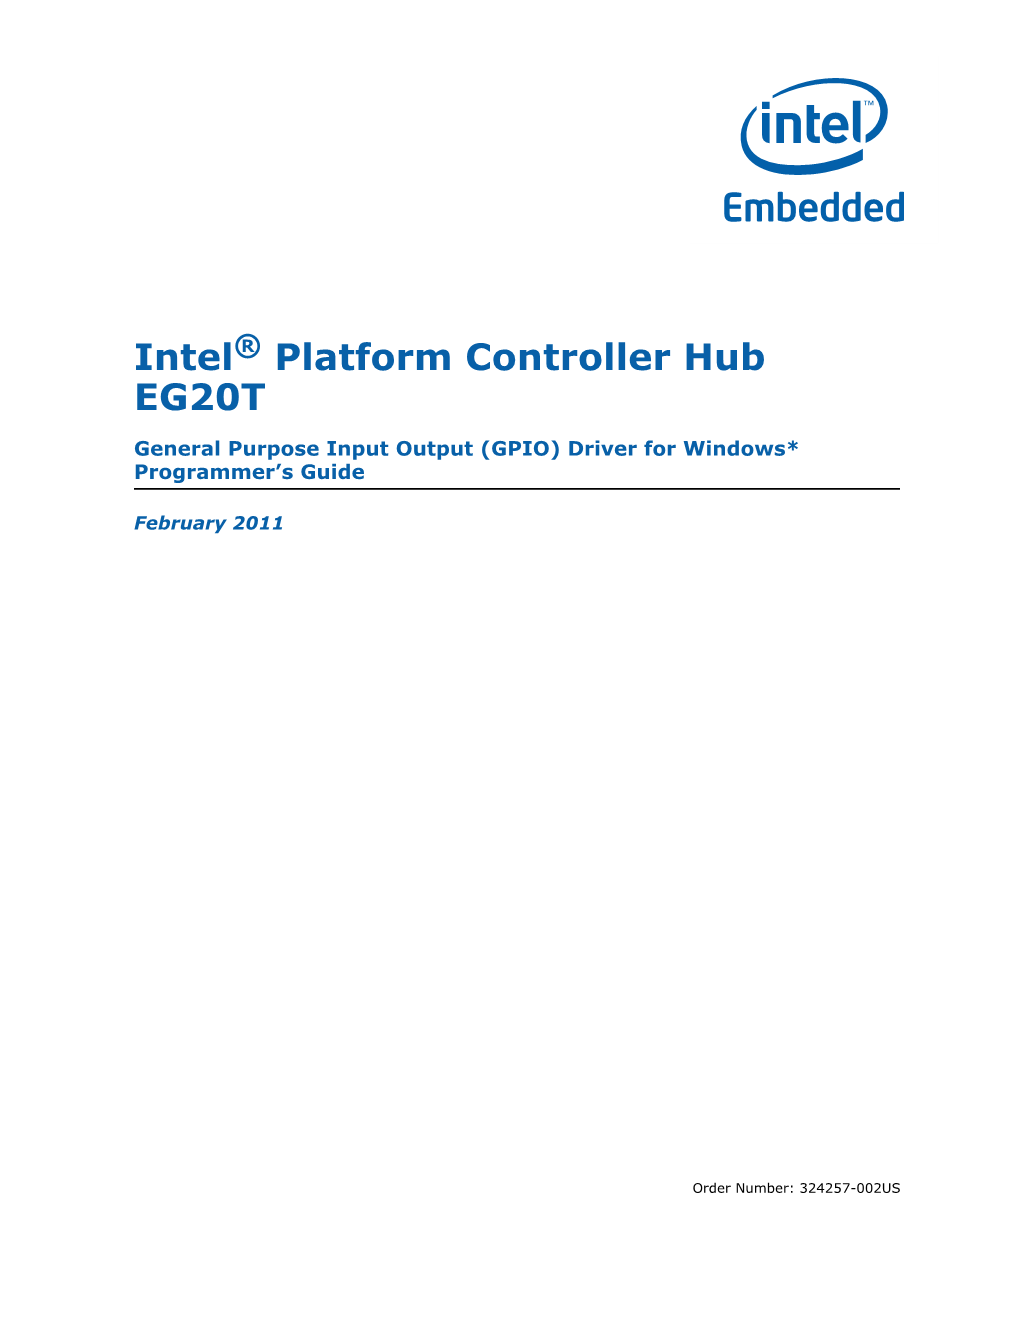 Intel® Platform Controller Hub EG20T General Purpose Input Output